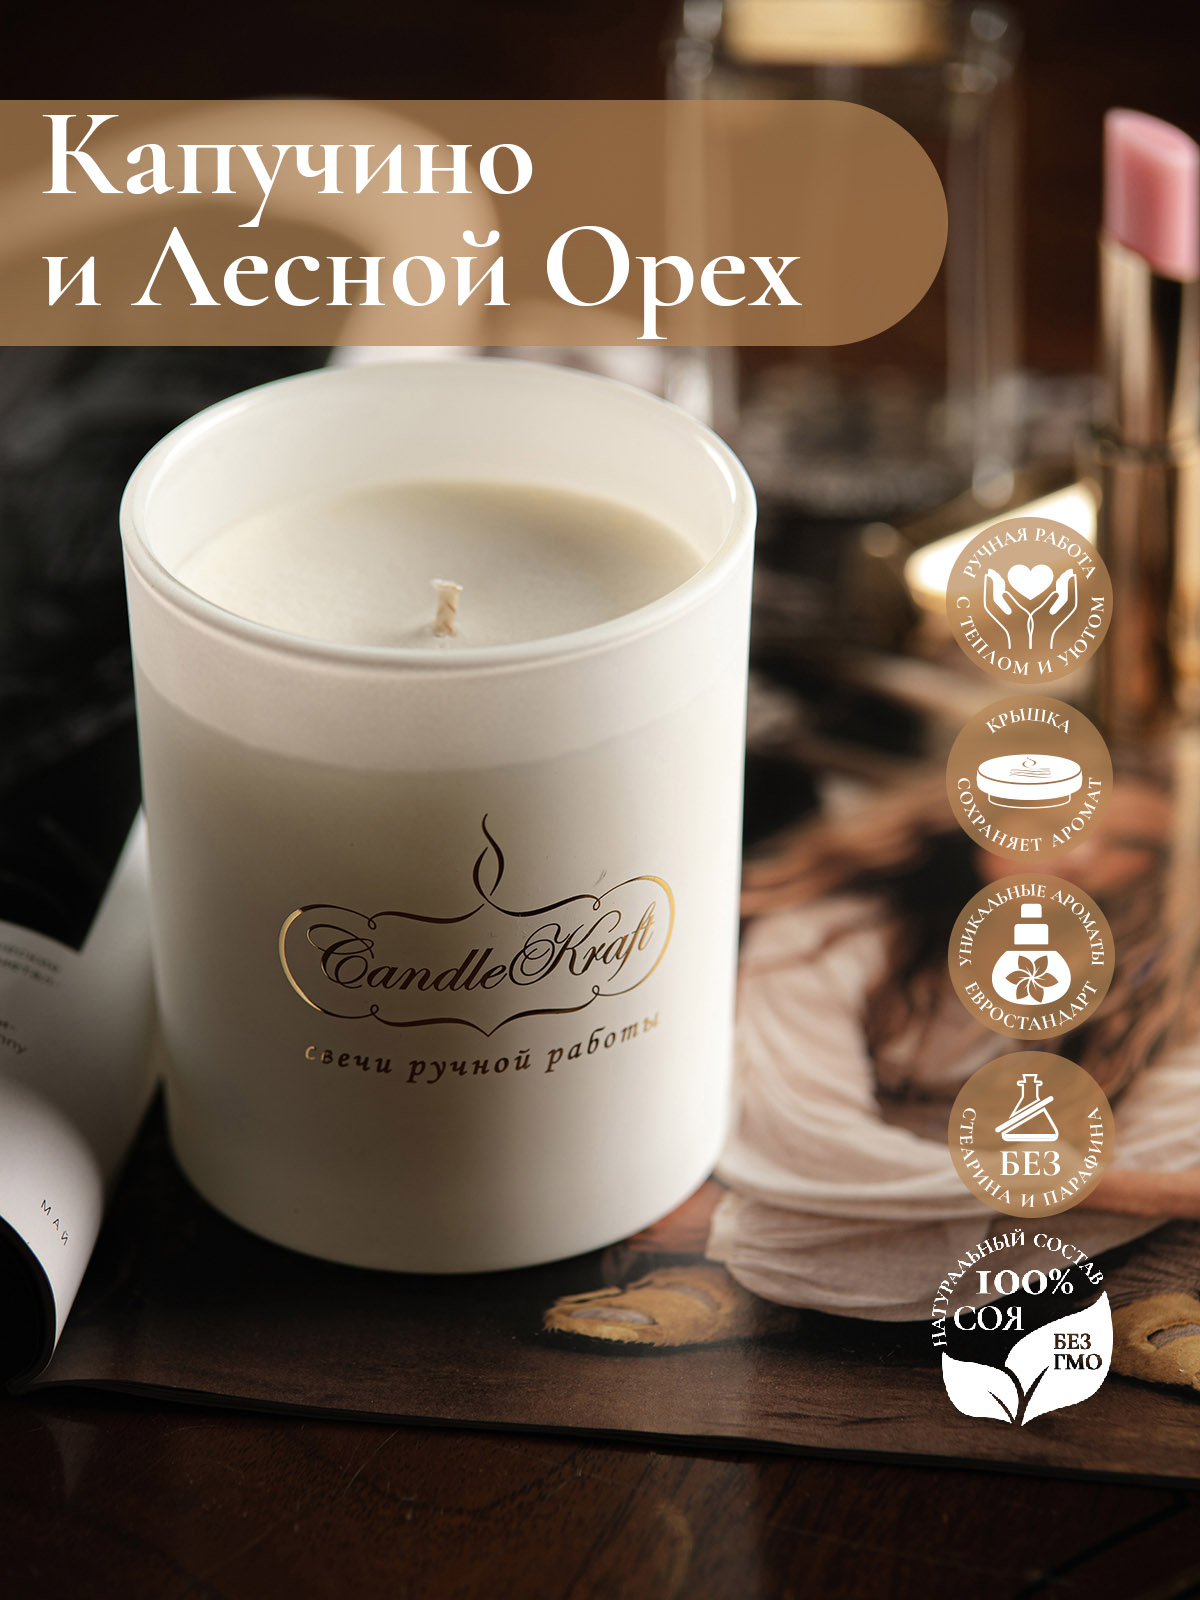 Свеча ароматическая CandleKraft Hazelnut Cappuccino Gentle Aroma white "Капучино Лесной Орех"